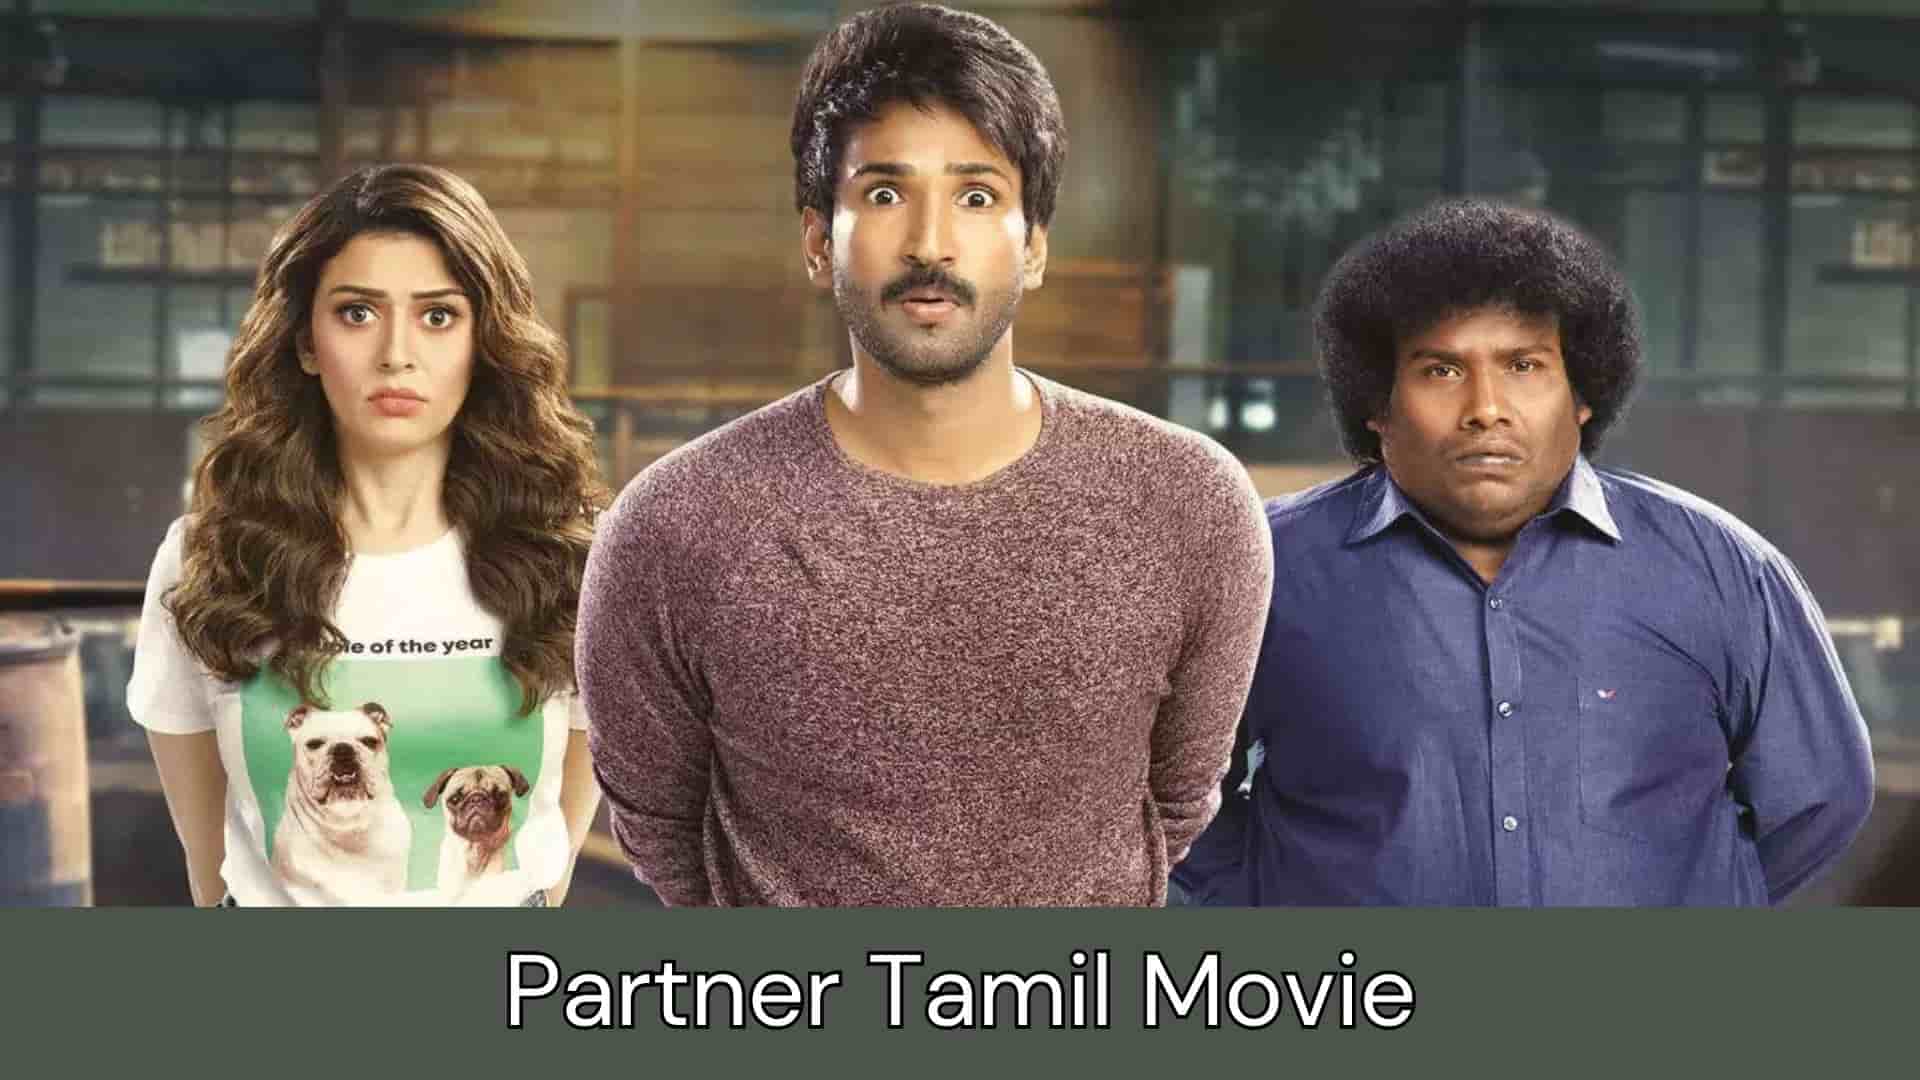 Partner Tamil Movie Ott, Release Date, Review, Watch Online